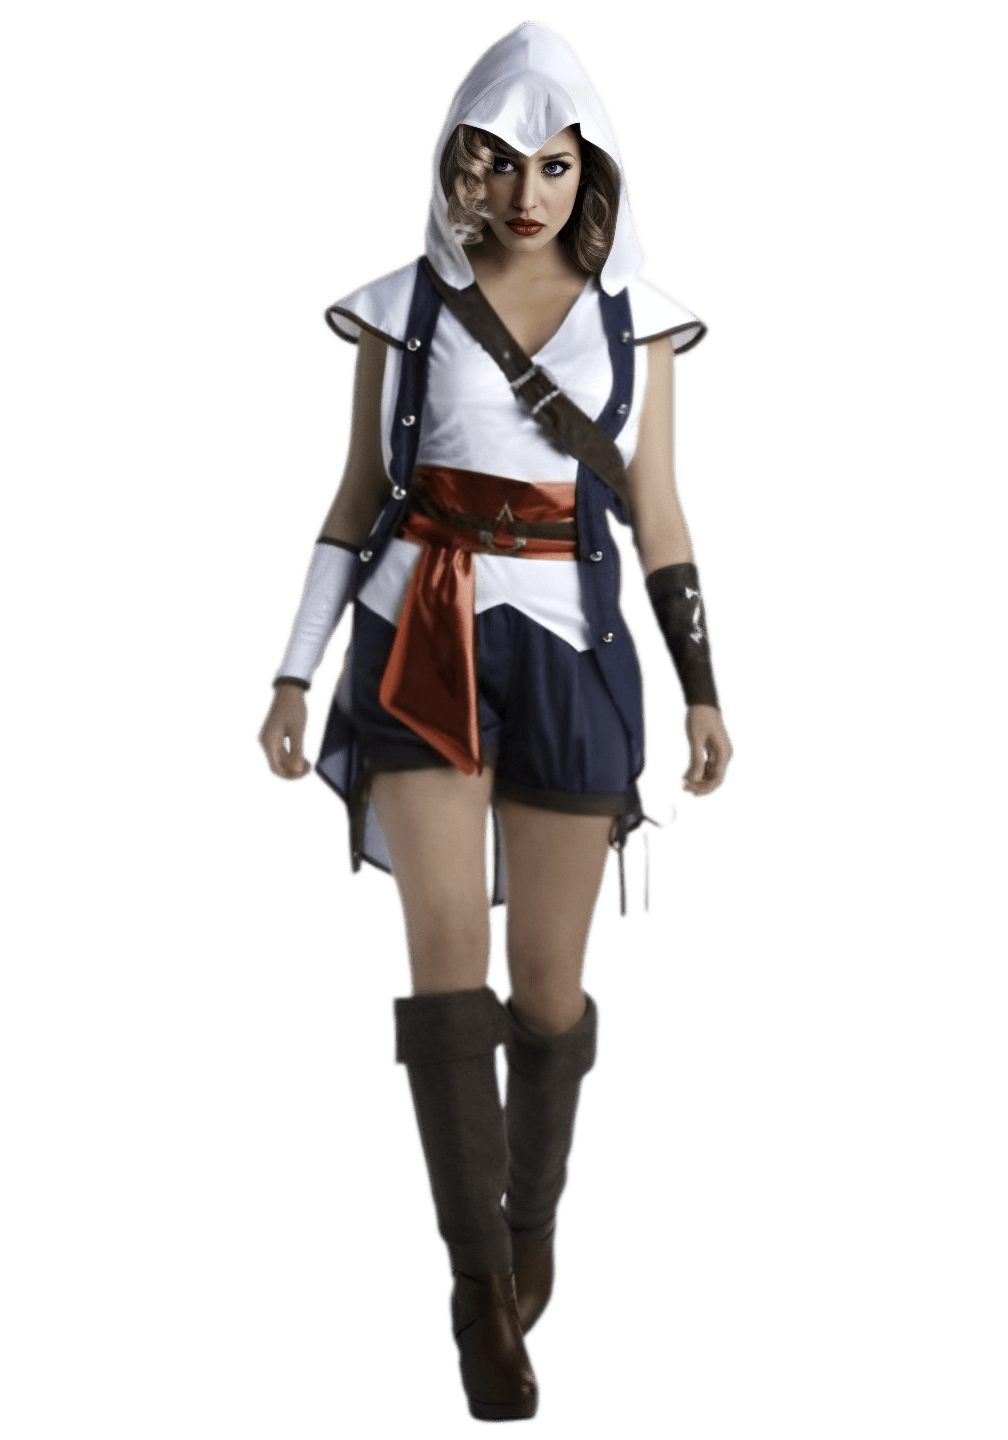 Women's Assassins Creed Connor Costume